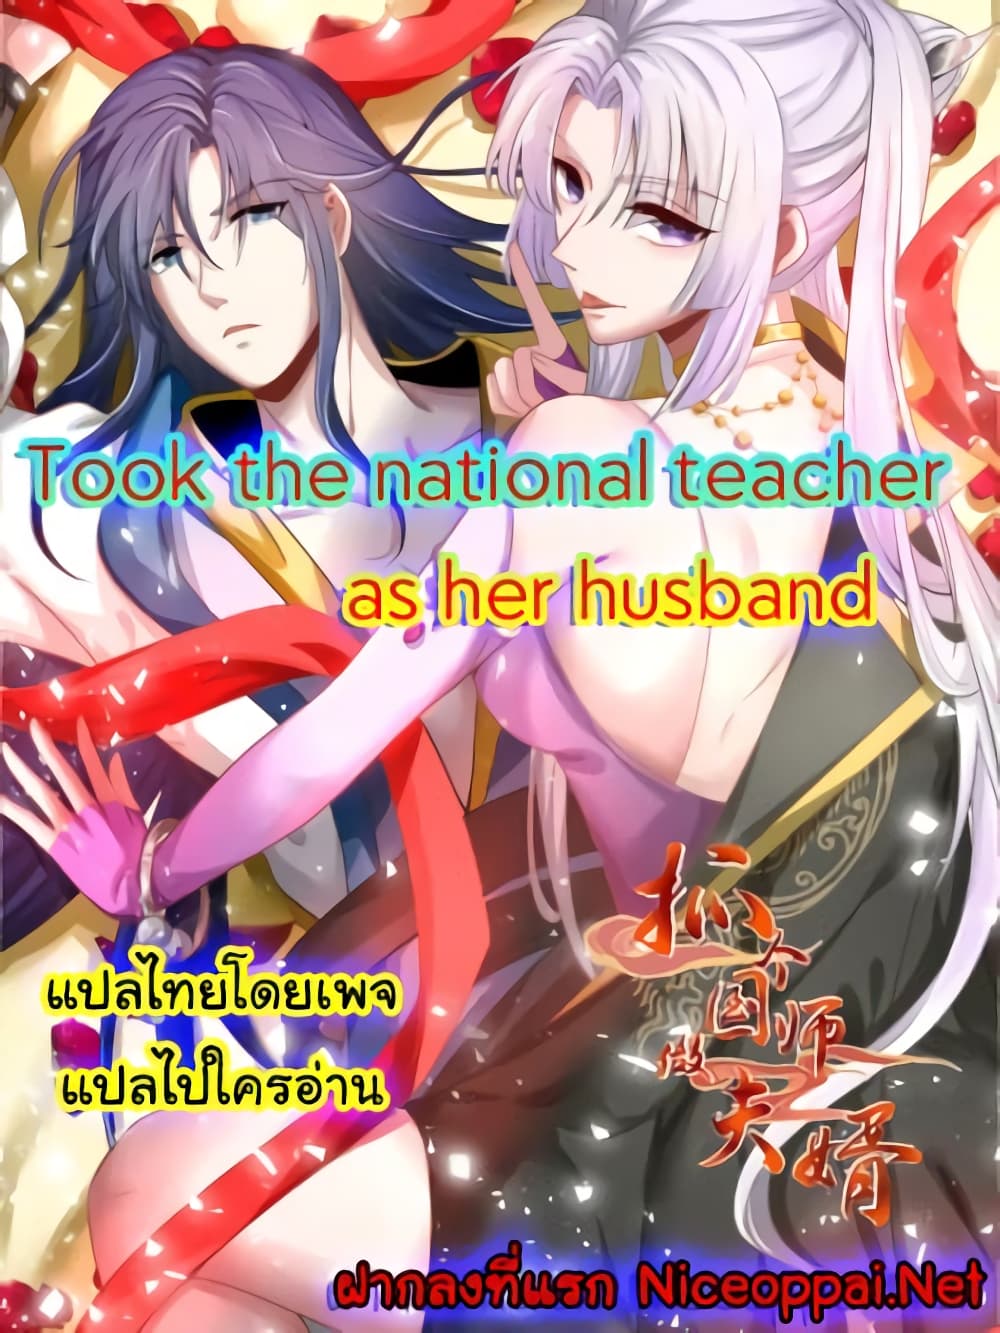 Took the National Teacher as Her Husband8 (1)